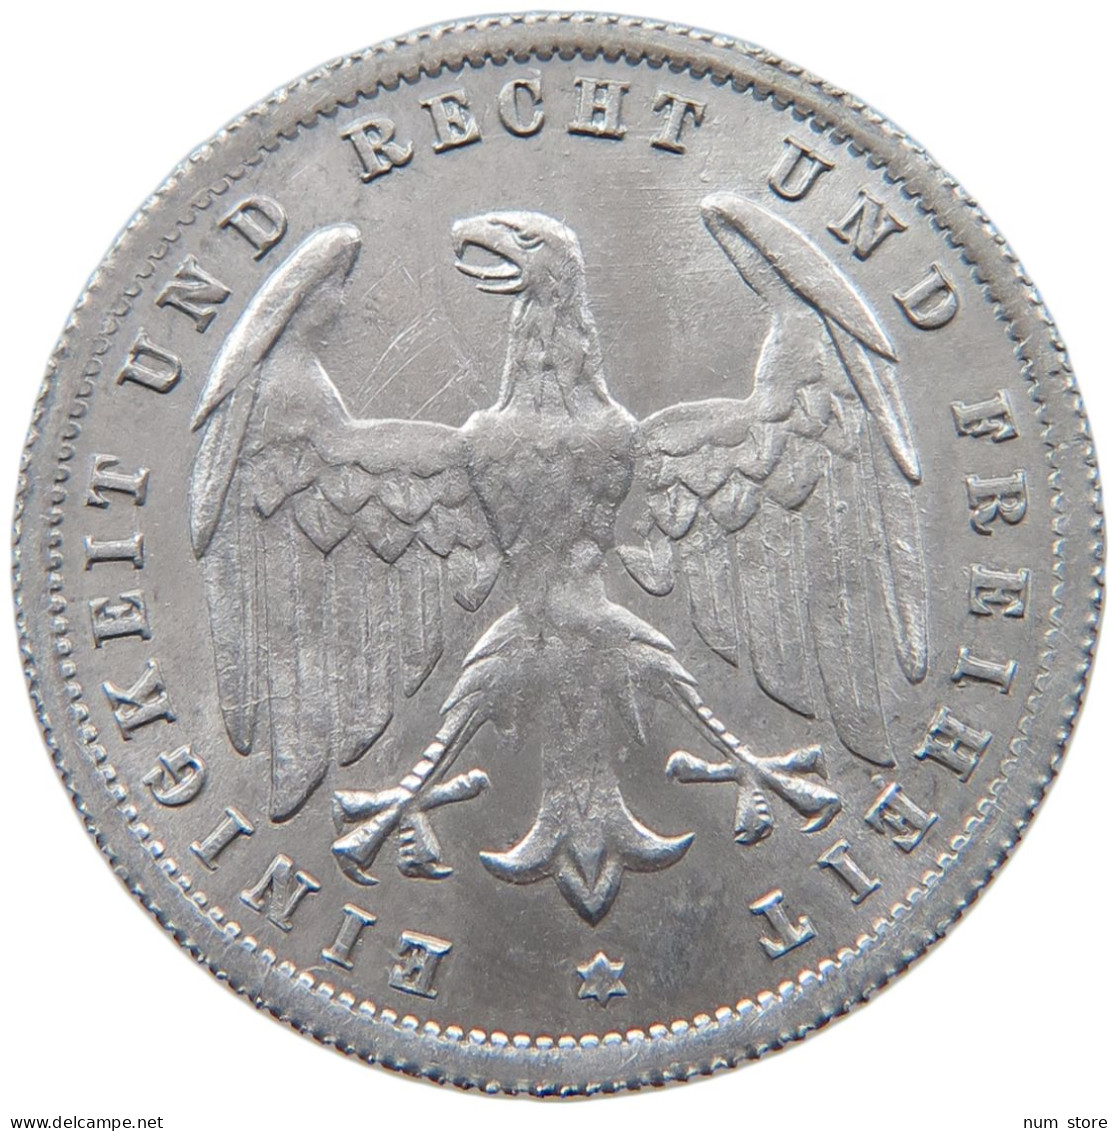 WEIMARER REPUBLIK 500 MARK 1923 F  #MA 098585 - 200 & 500 Mark